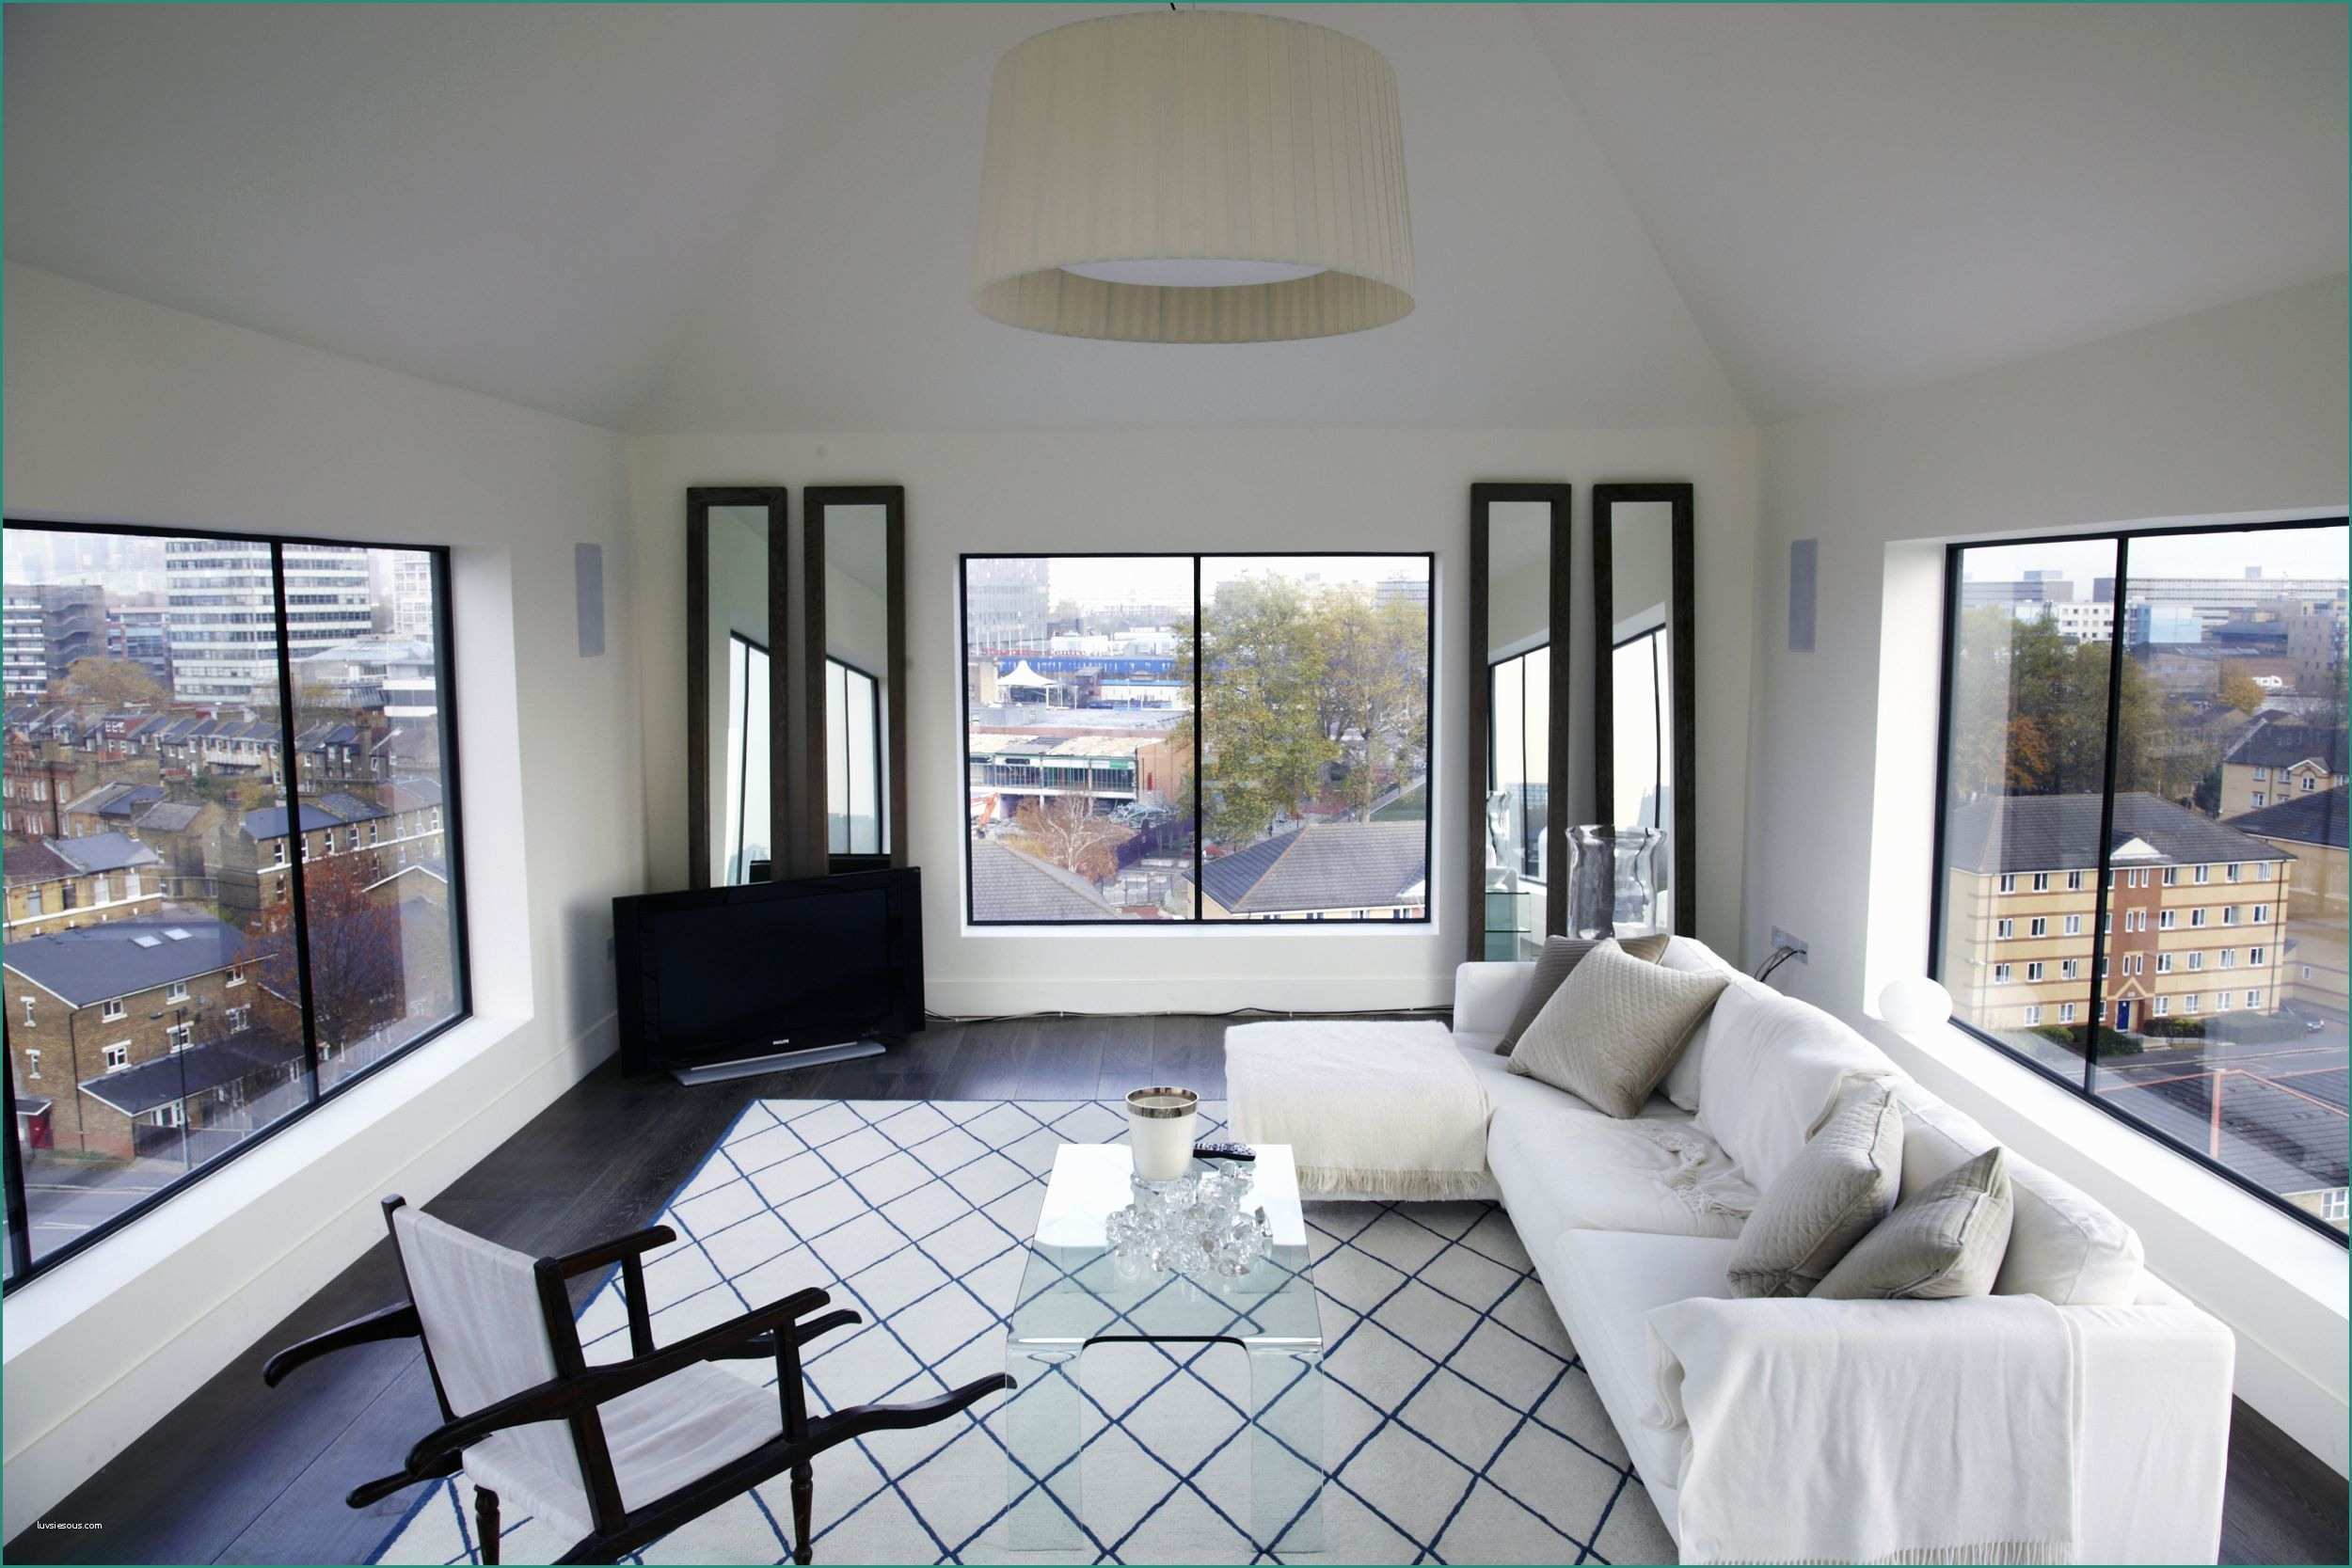 Riviste Arredamento Casa E Floor to Ceiling Windows with Views Reaching Across London